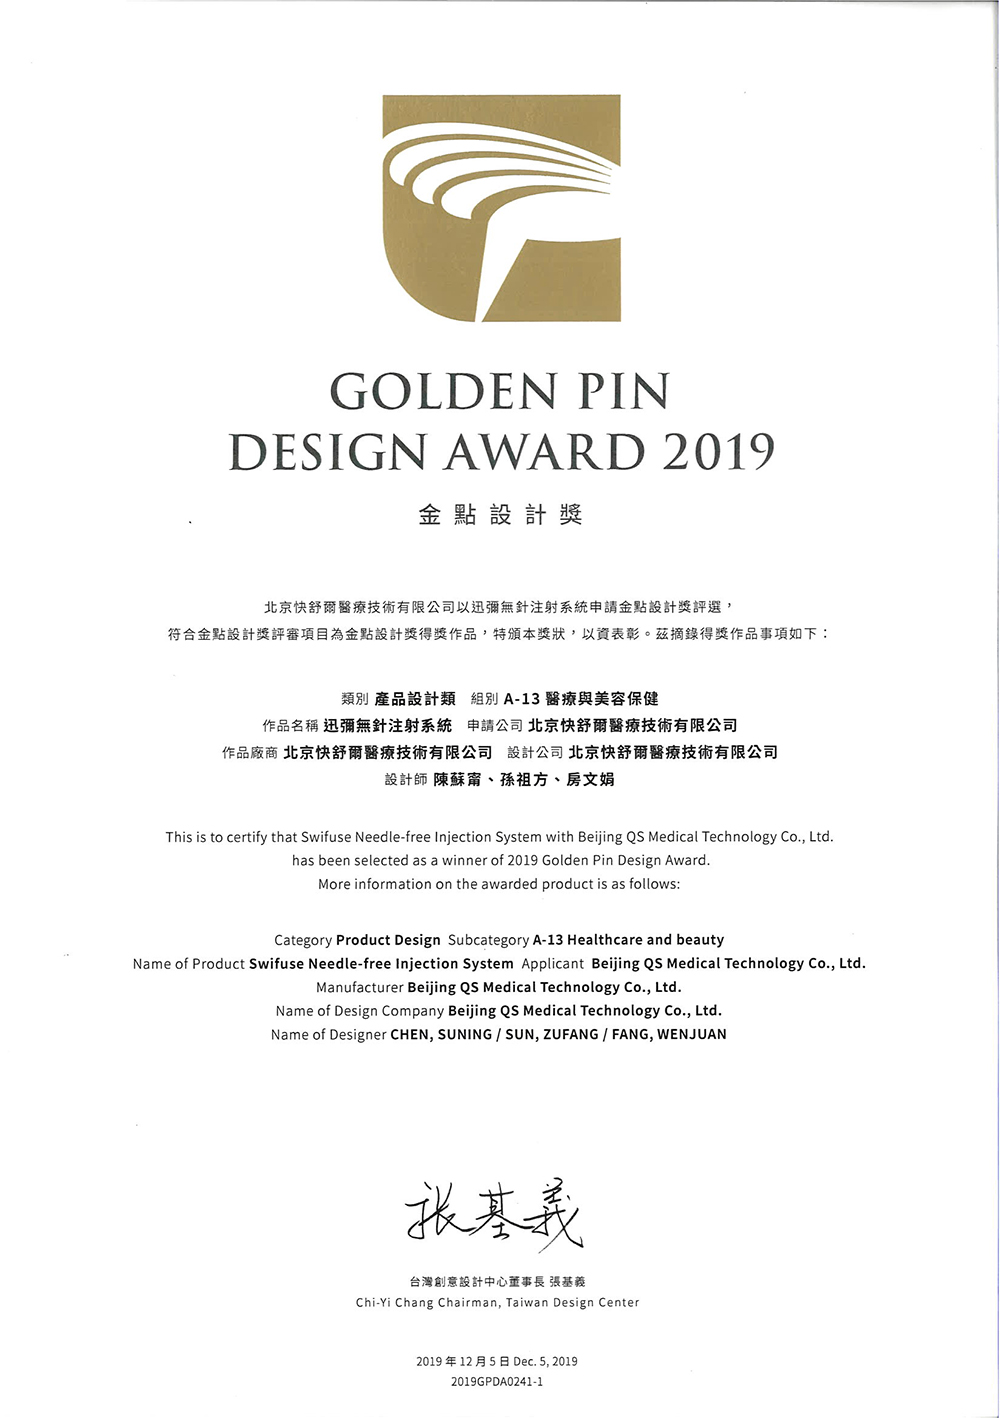 Premio Golden Dot de Taiwán